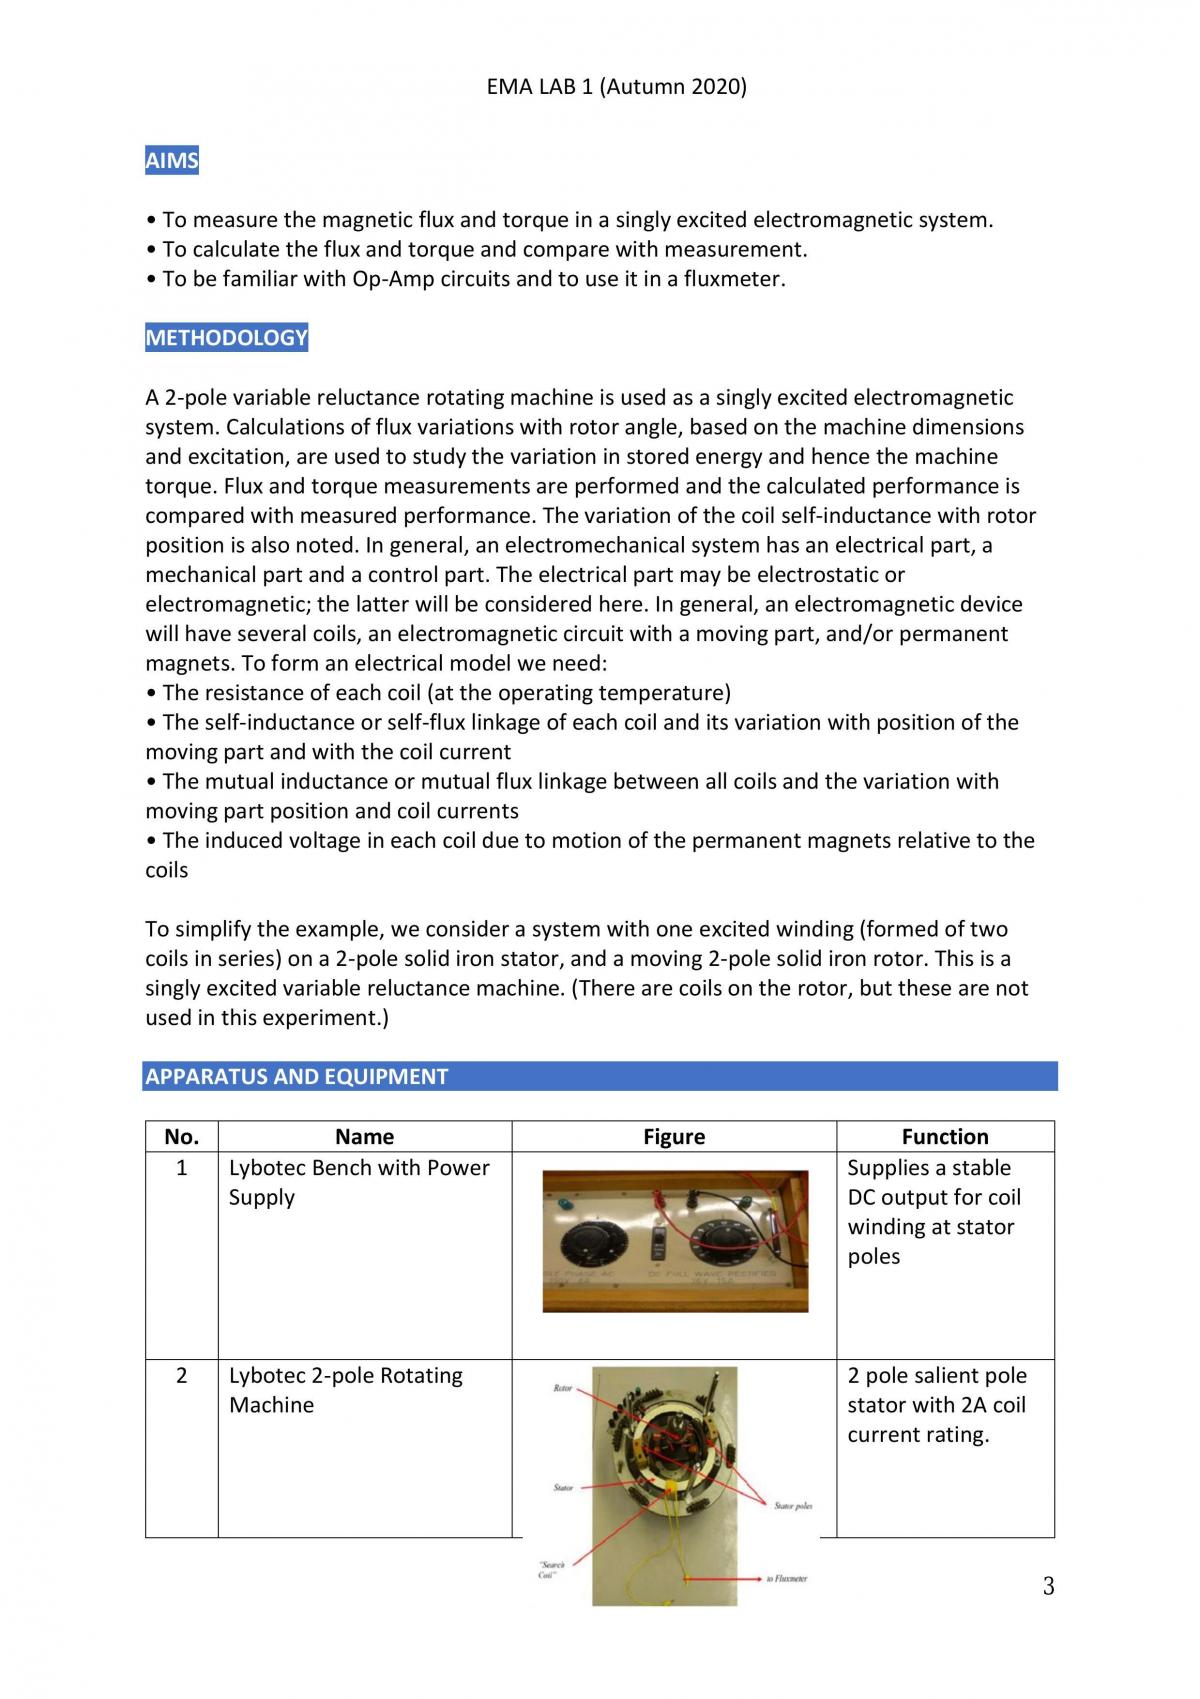 EMA Lab 1 Autumn 2020 - Page 3